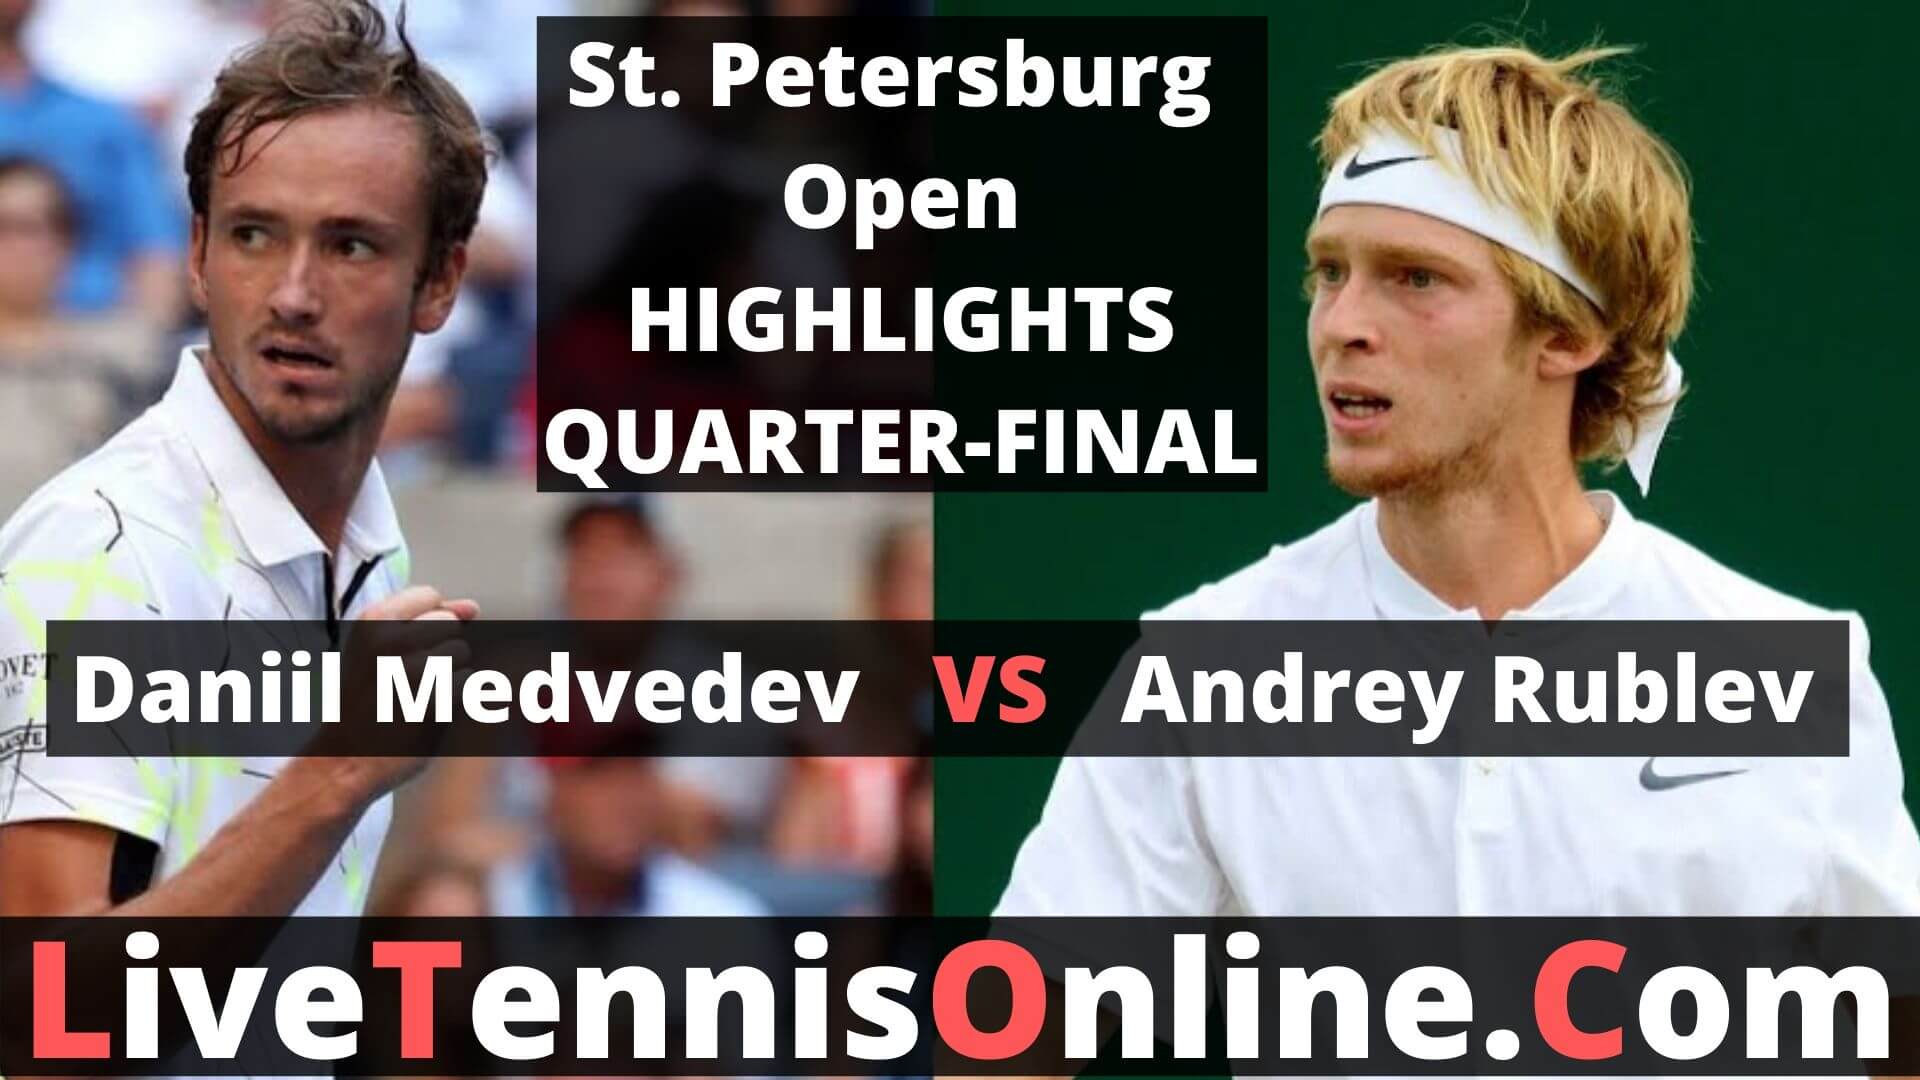 Daniil Medvedev Vs Andrey Rublev Highlights 2019 St. Petersburg Open QF